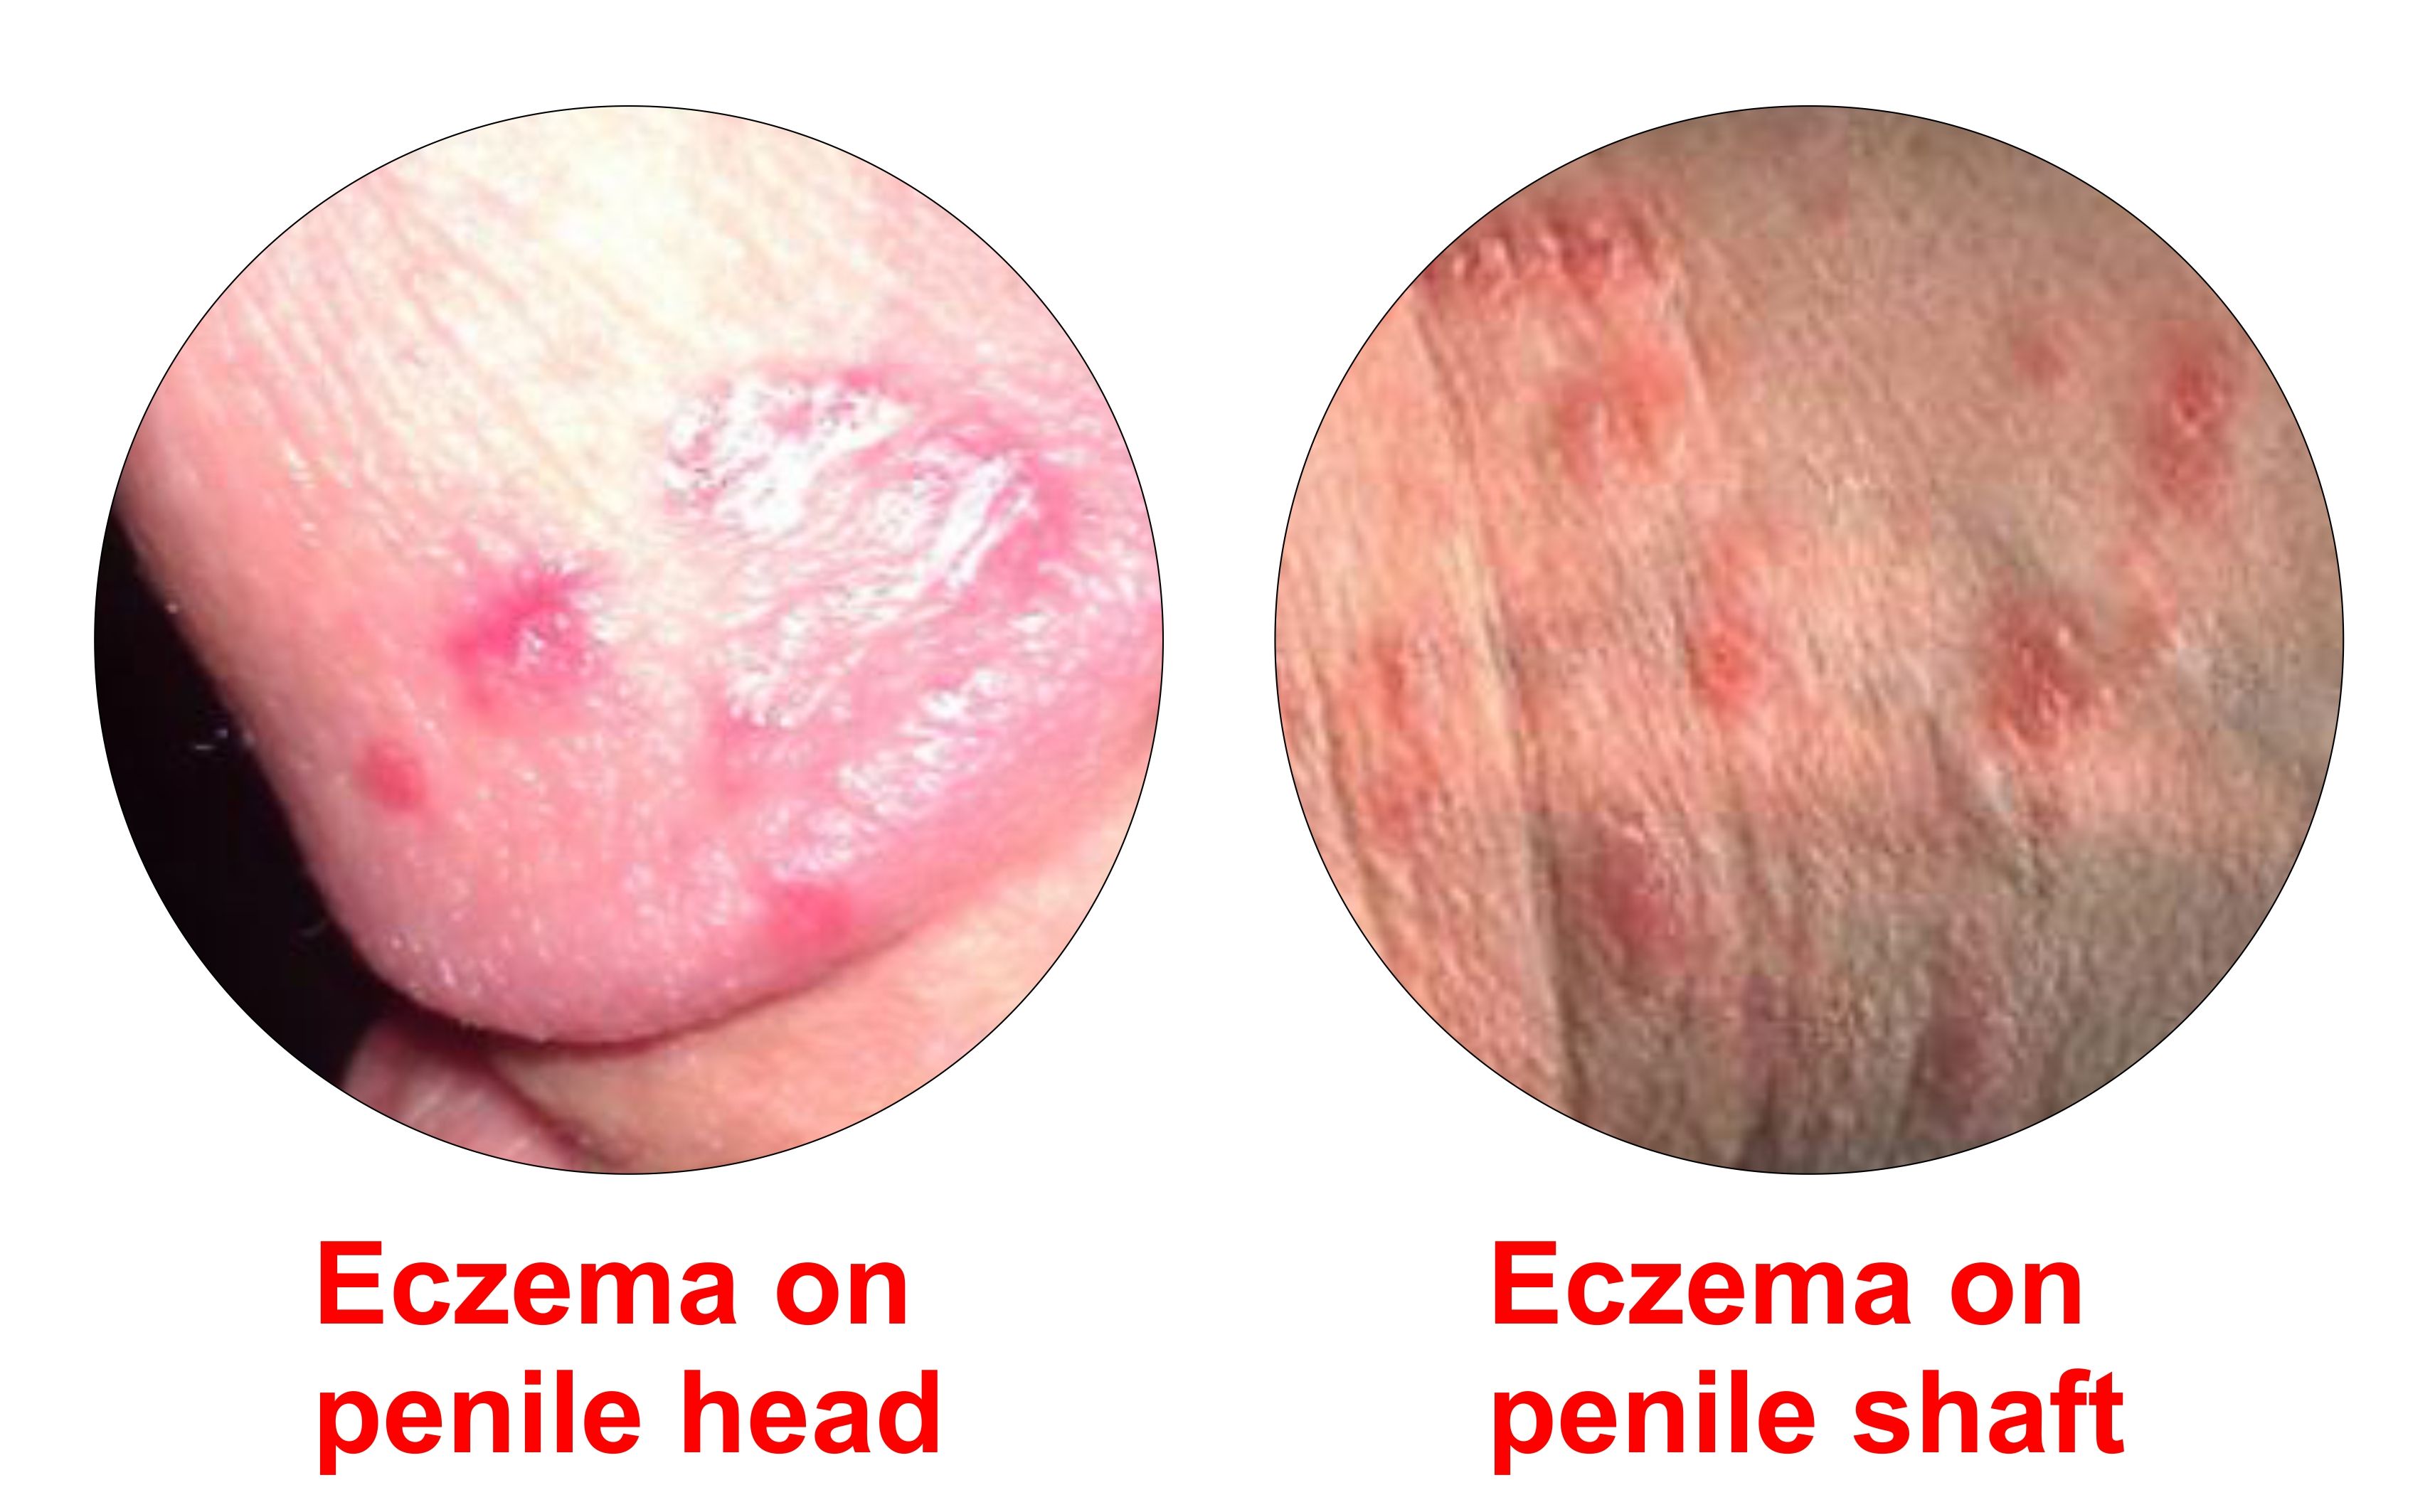 Eczema on penis head